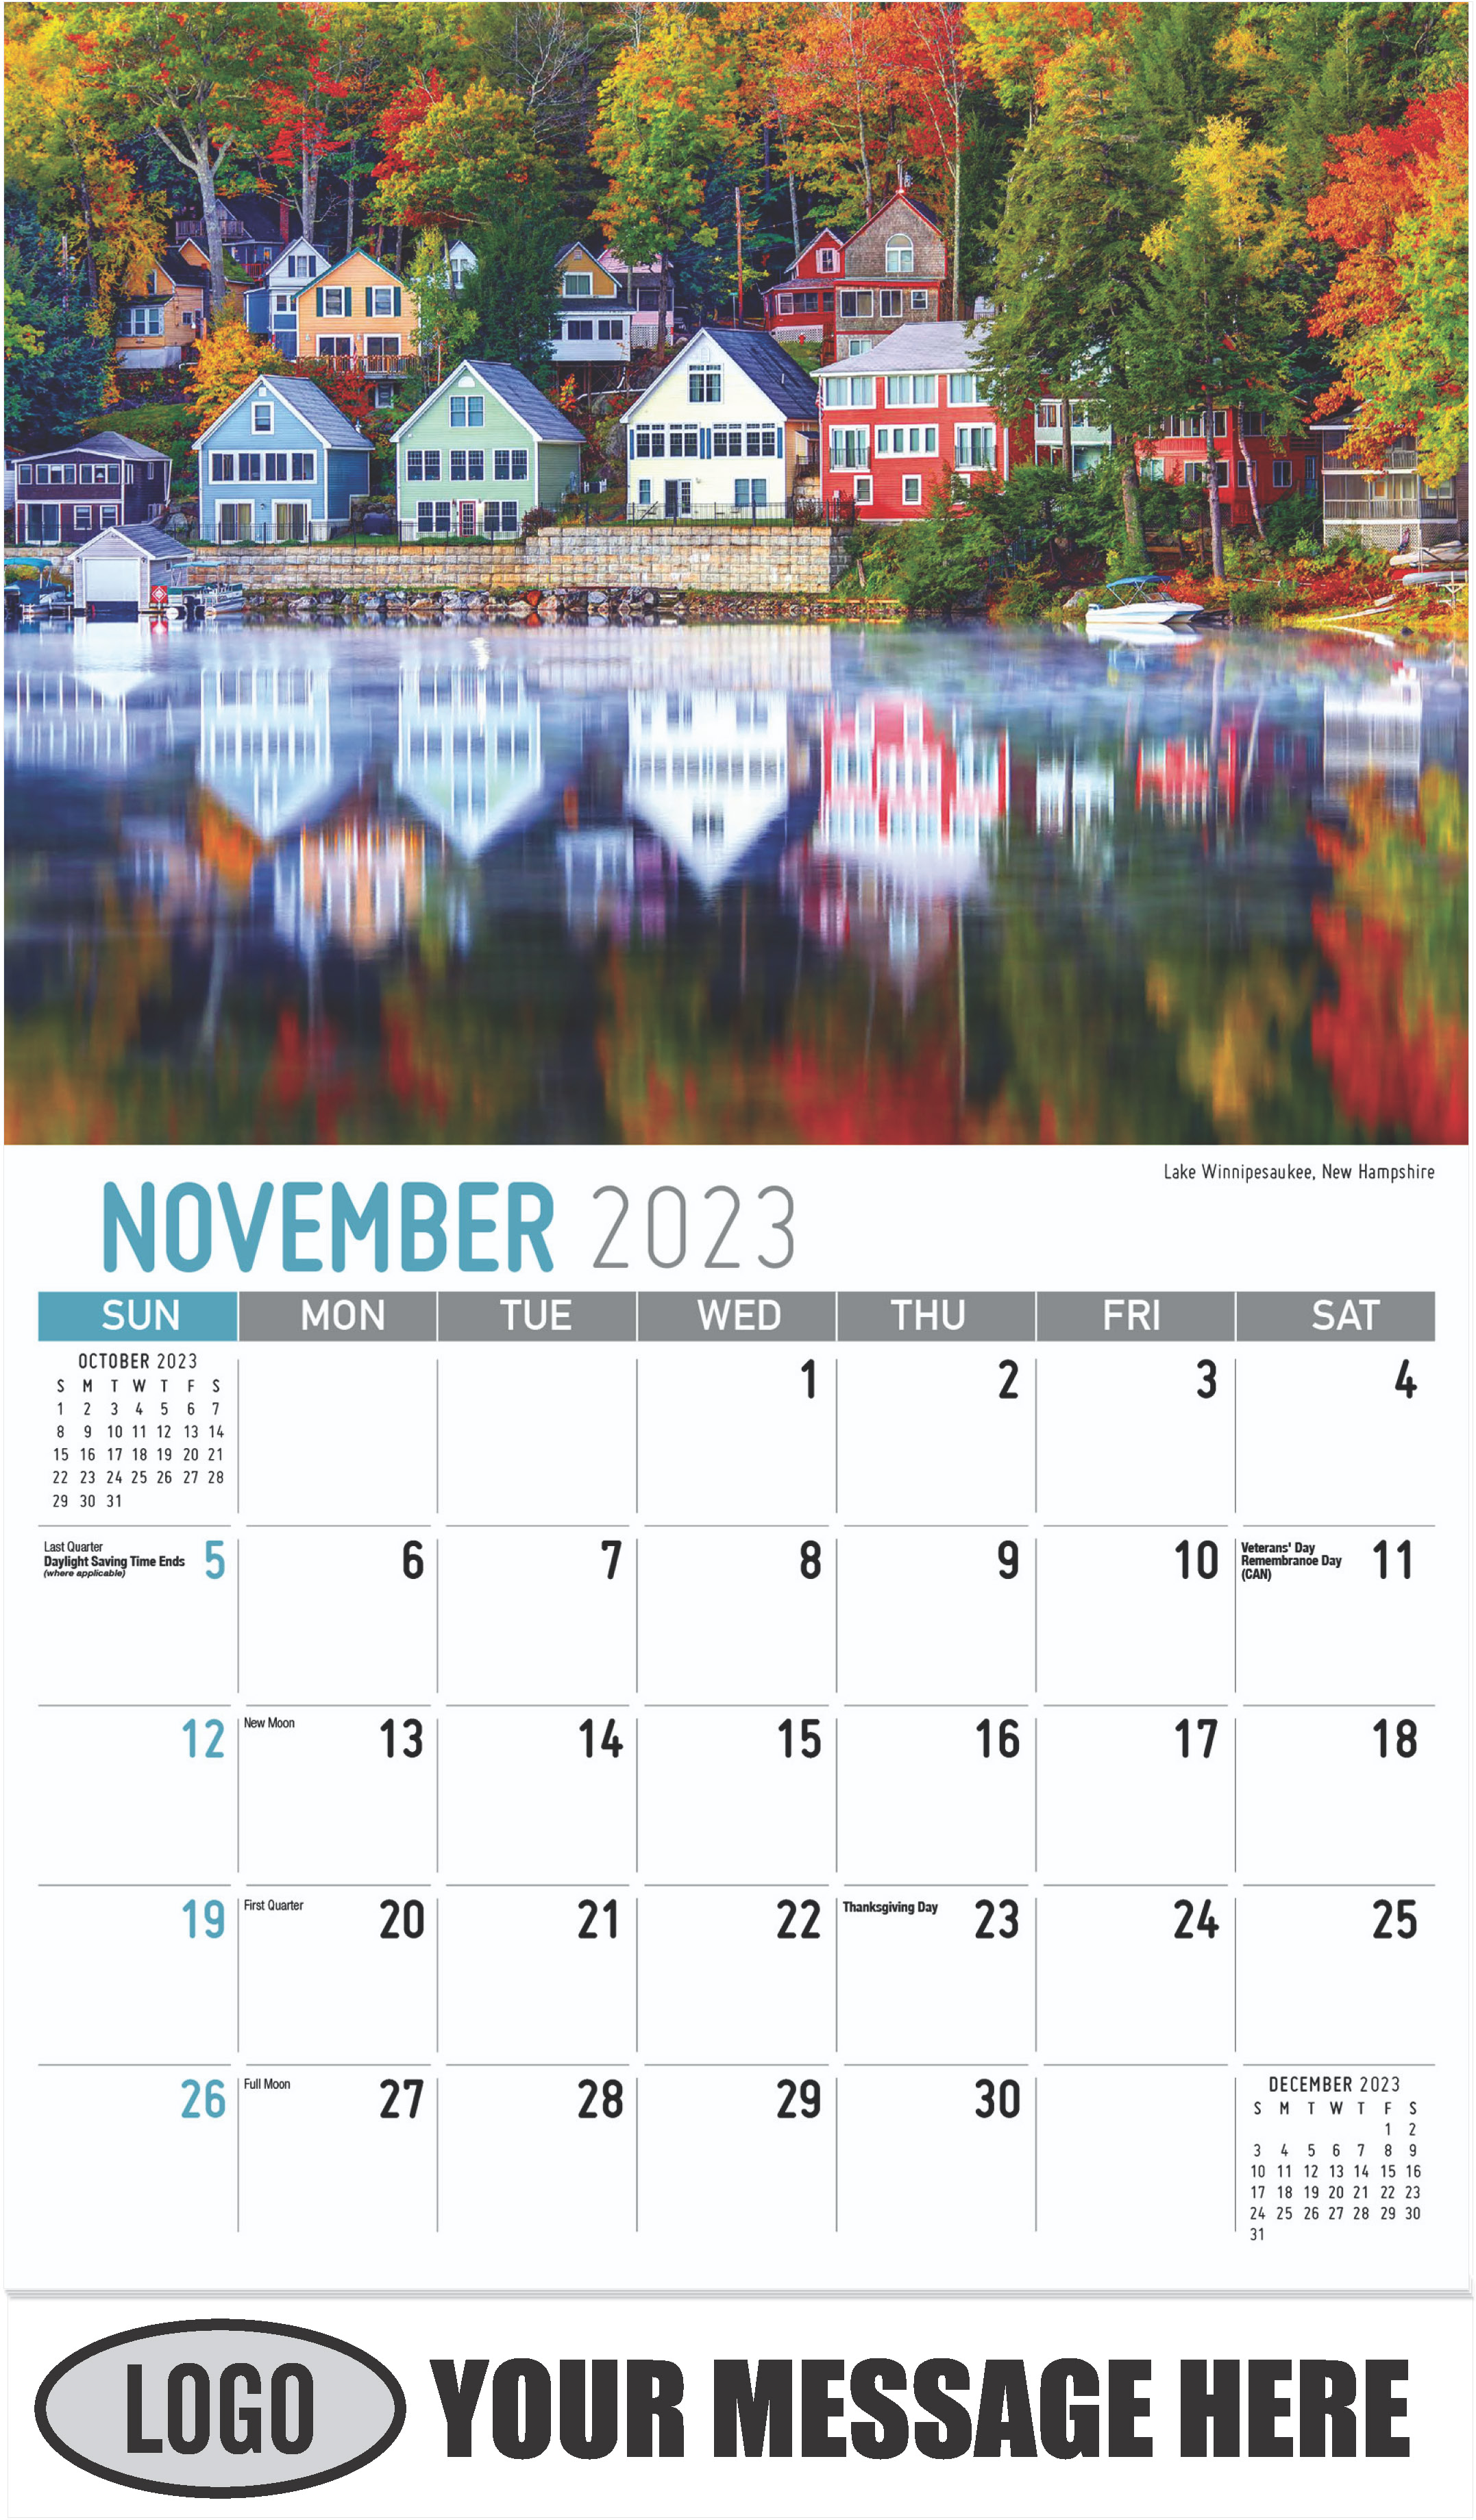 Lake Winnipesaukee, New Hampshire - November - Scenes of New England 2023 Promotional Calendar